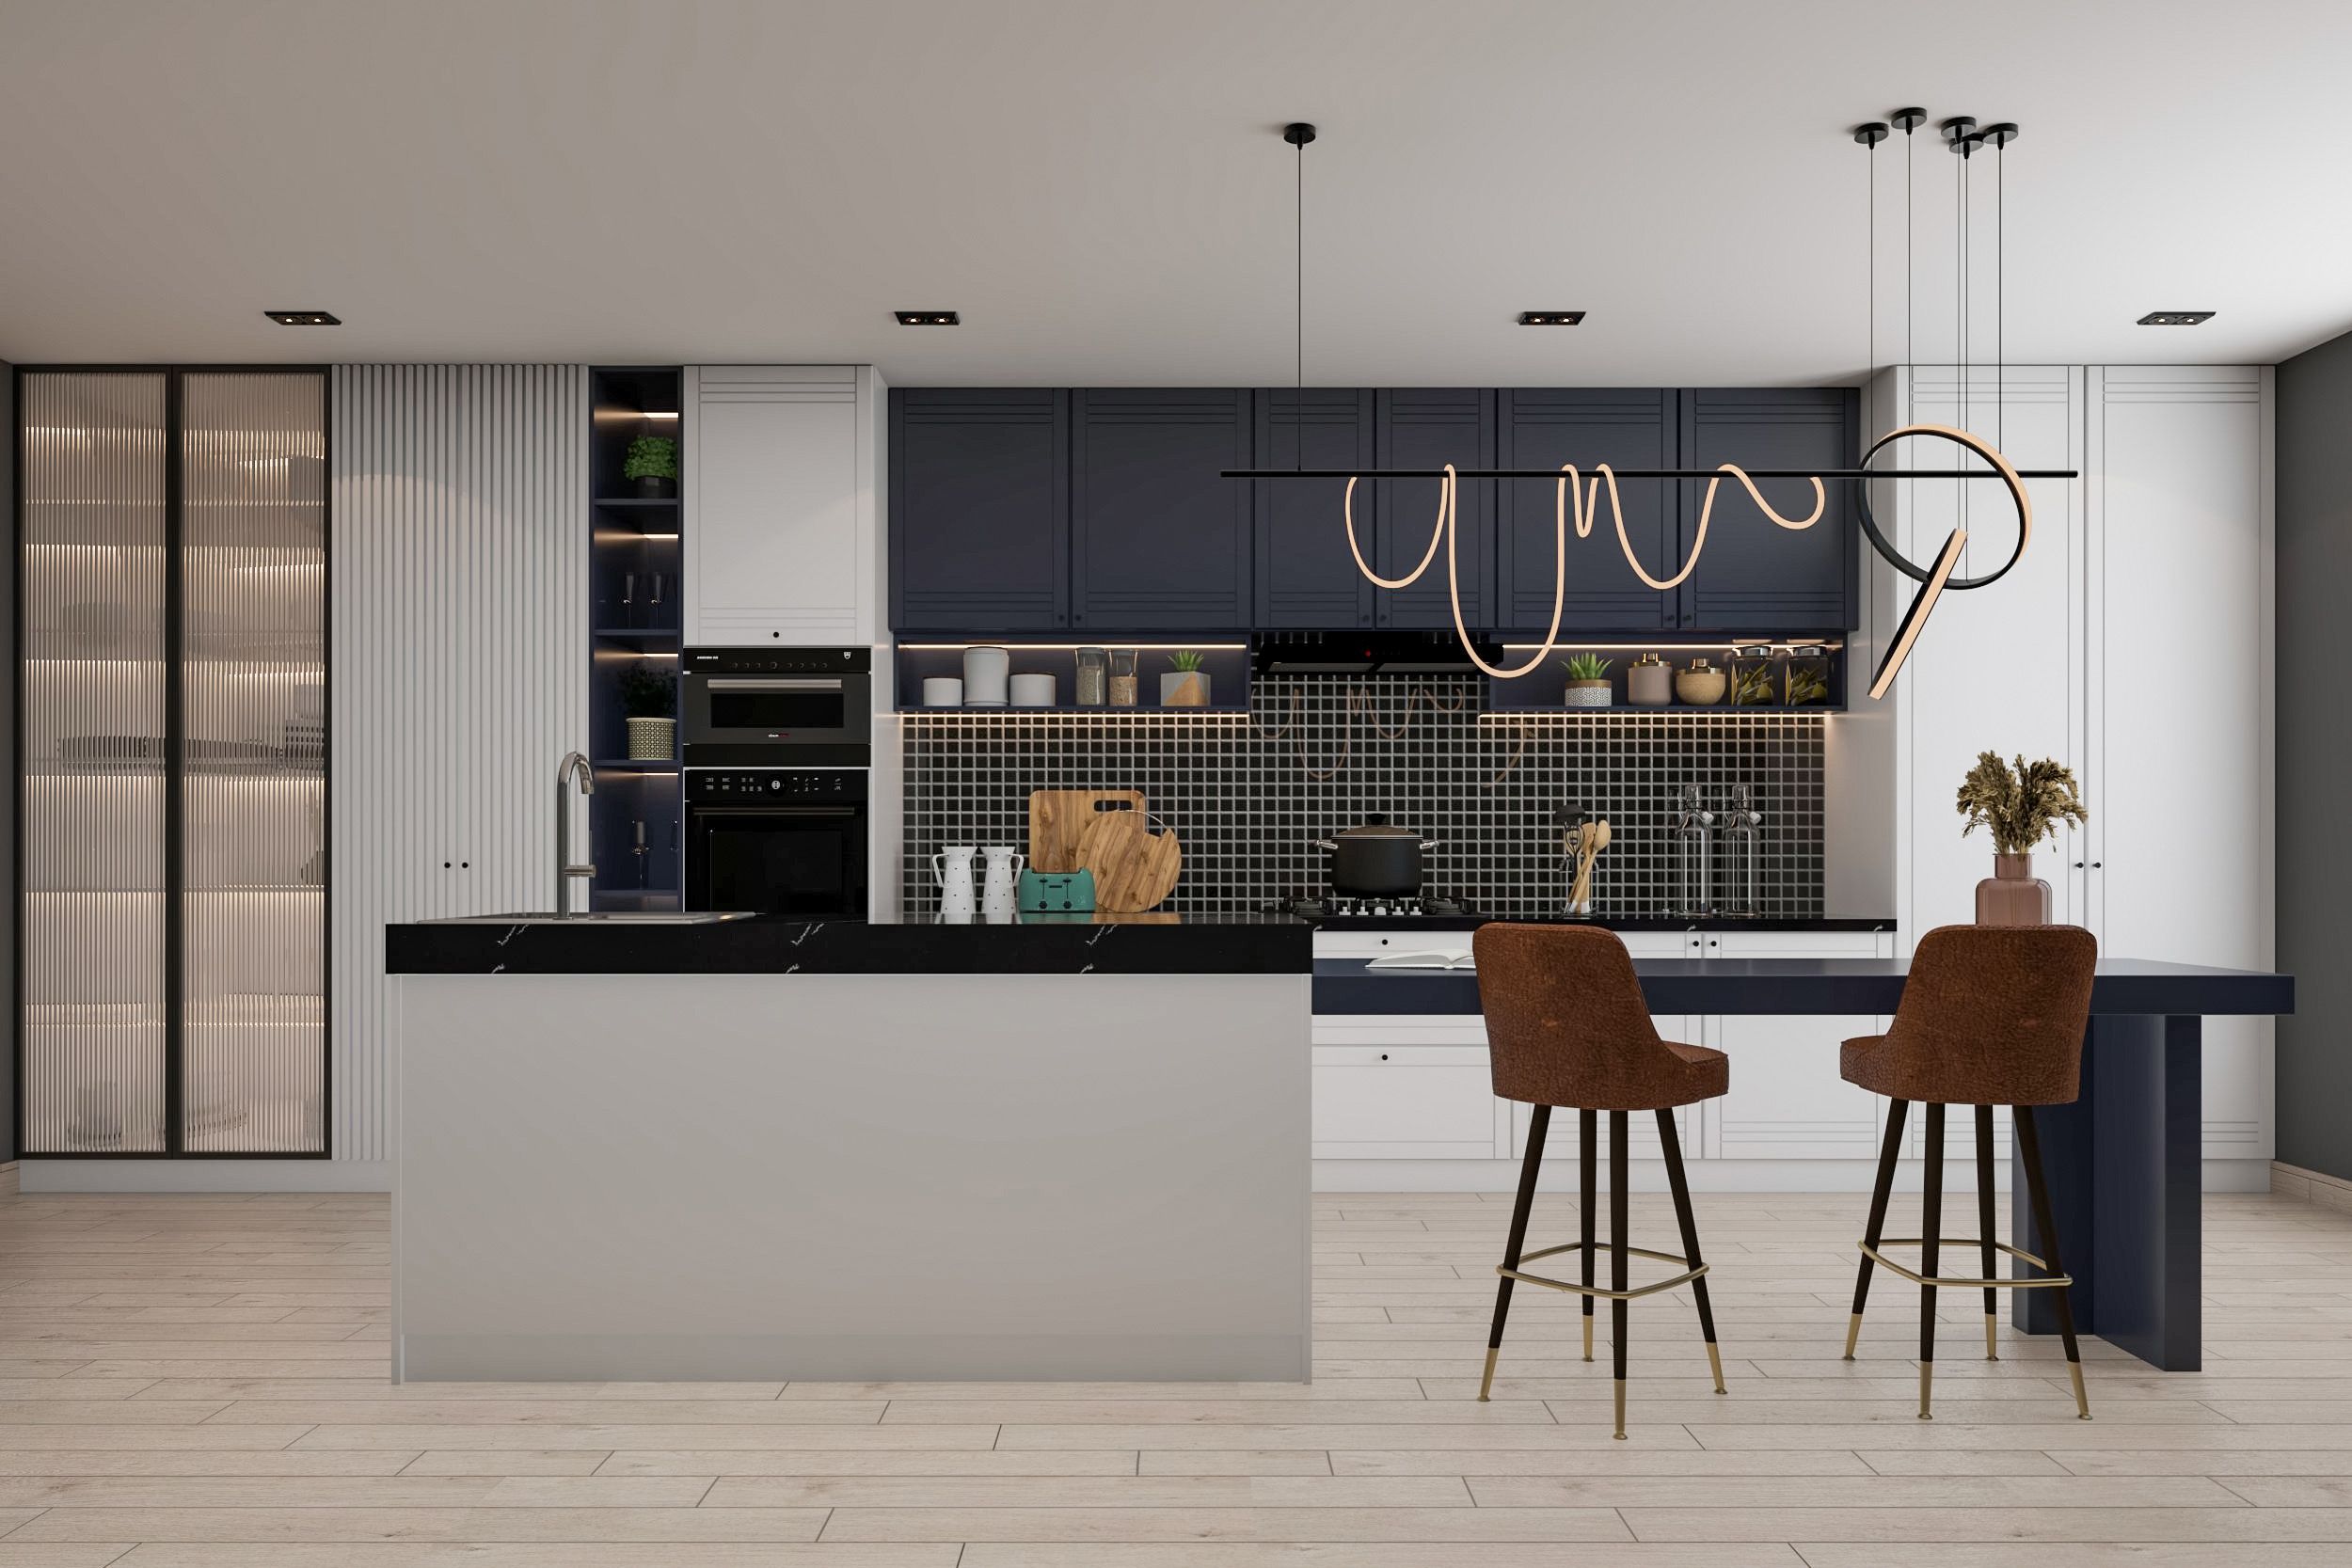 Modern Island Regalia Kitchen Design With Black And Off-White Kitchen Cabinets With Kitchen Island